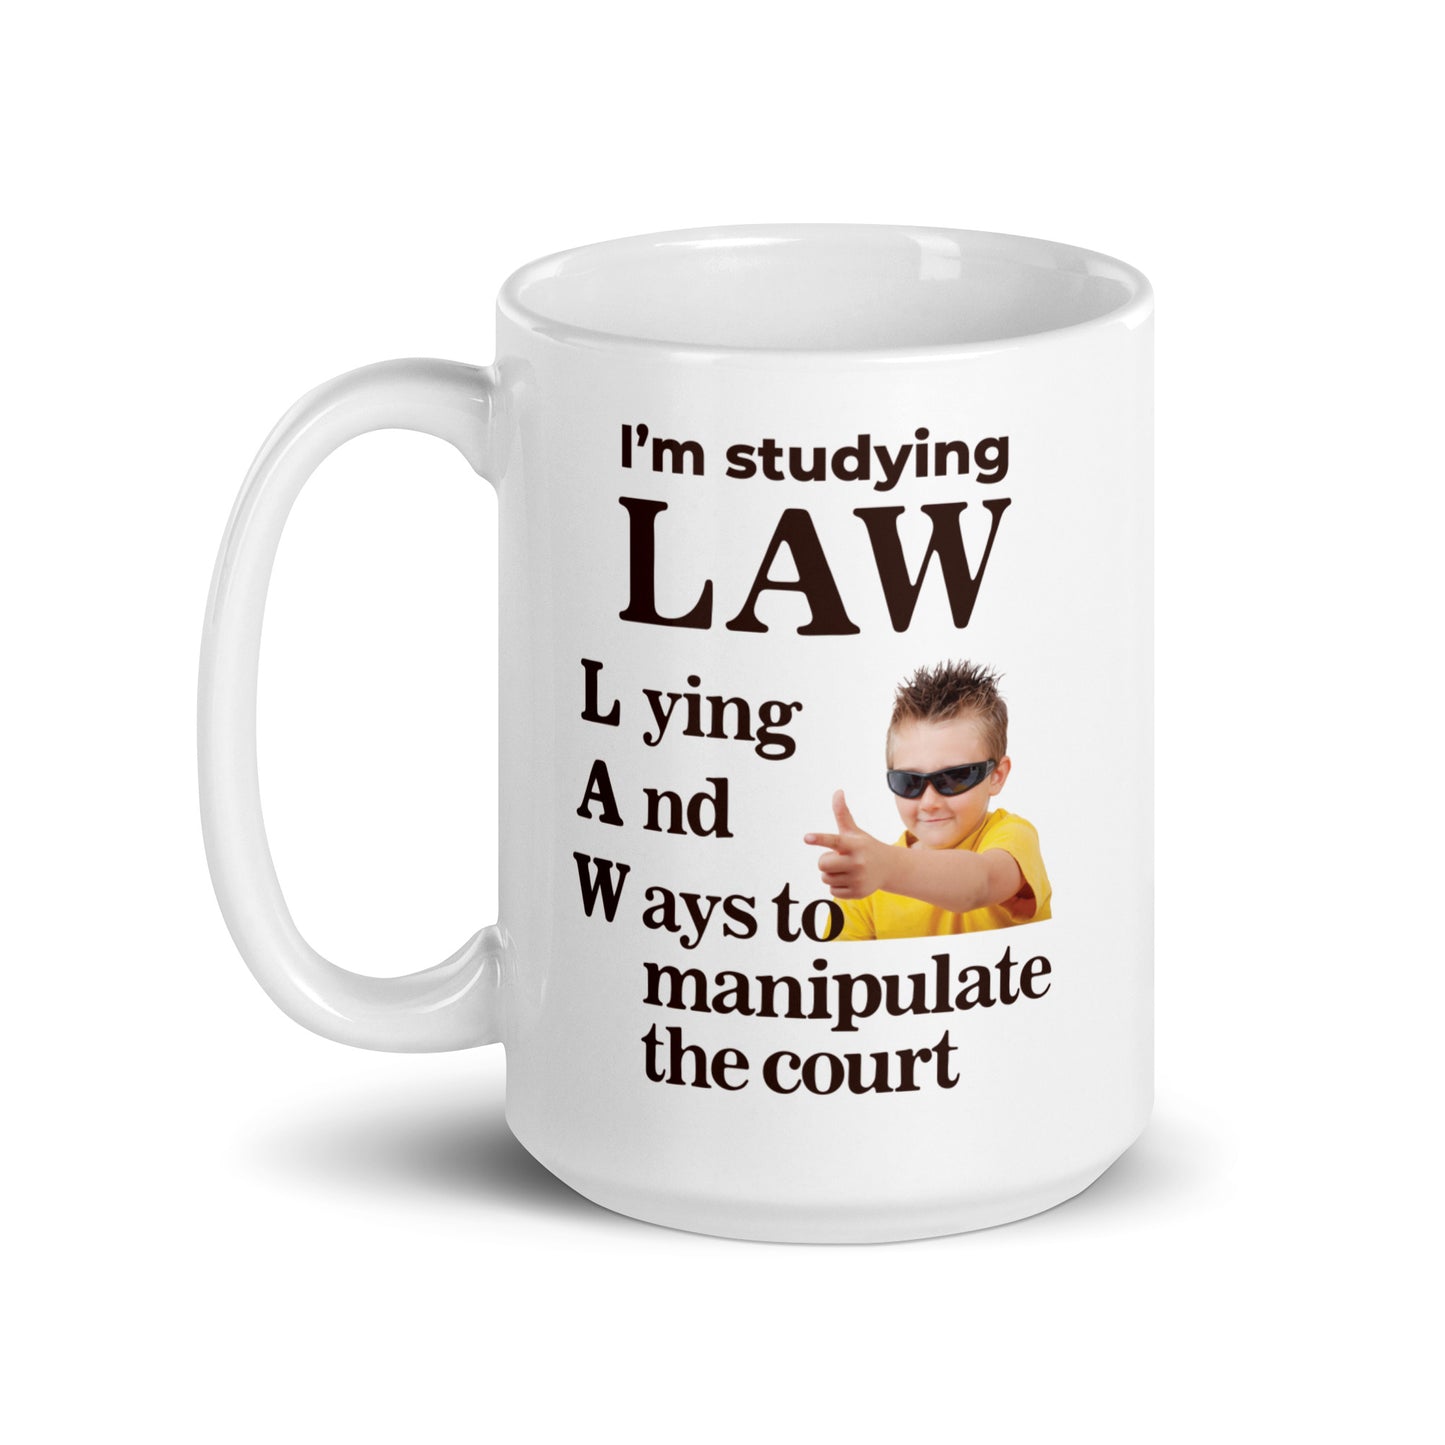 I'm Studying Law mug